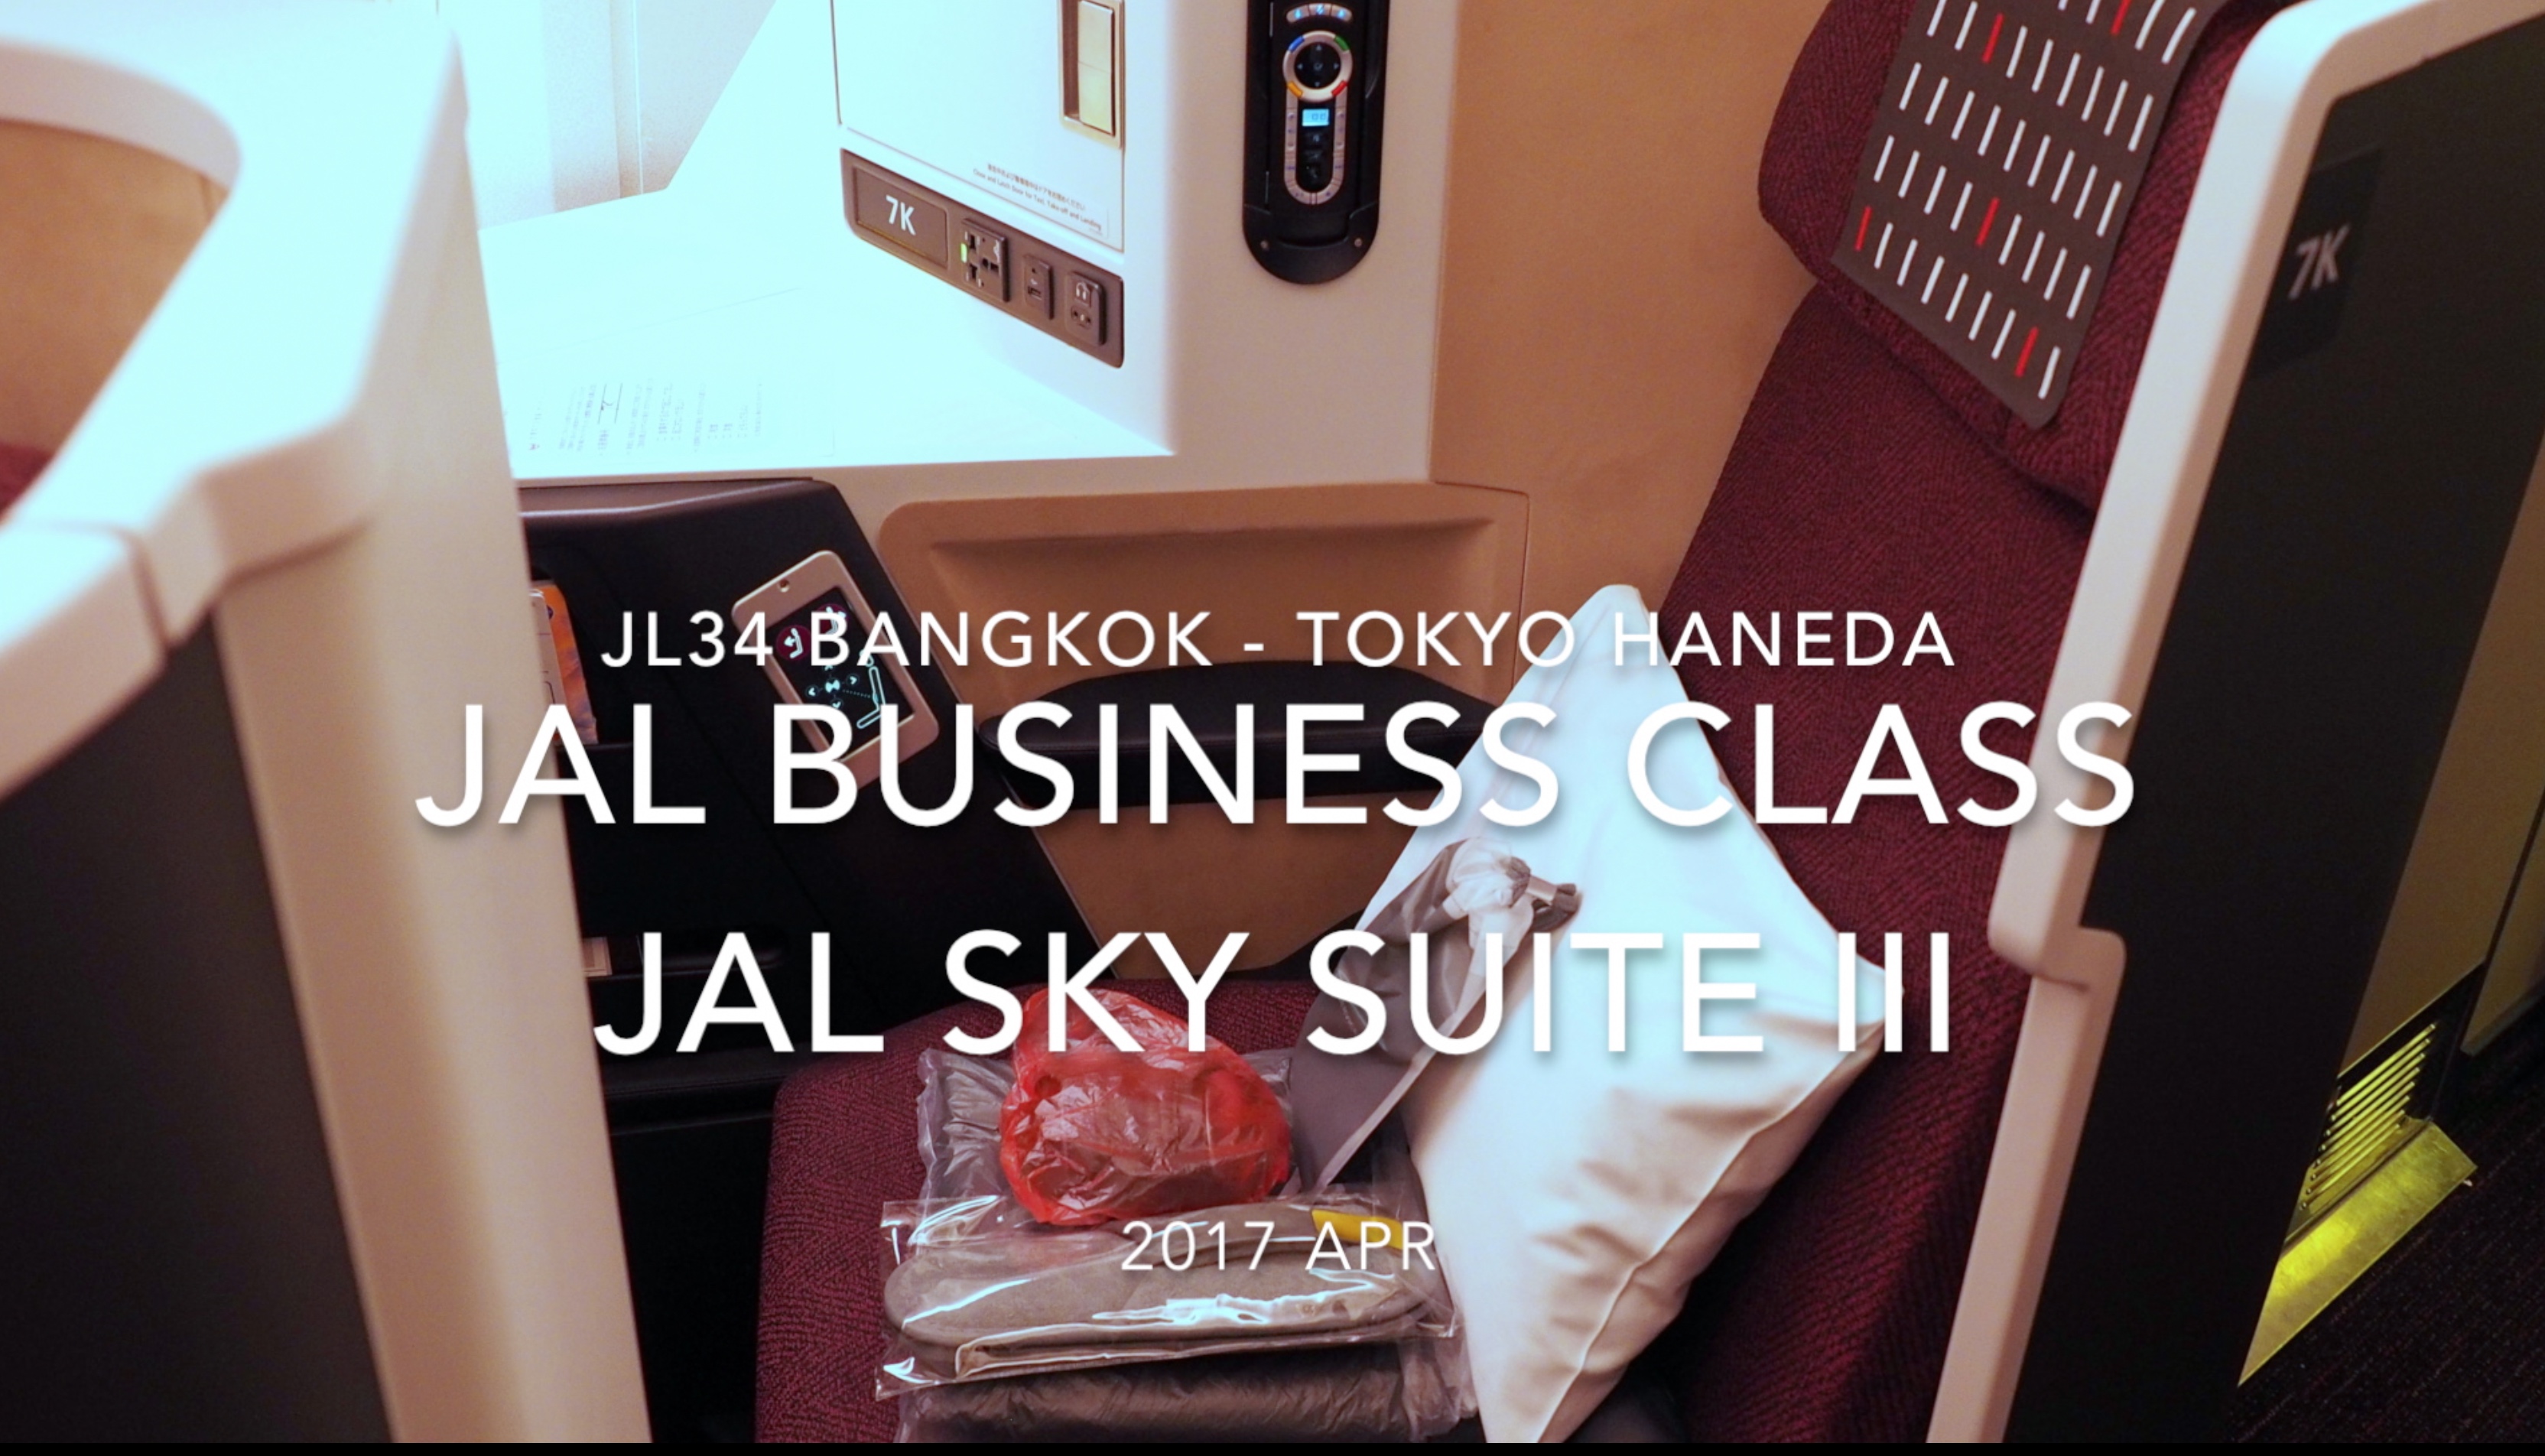 【Flight Report】JAL Business Class JAL SKY SUITE Ⅲ JL34 BANGKOK - TOKYO HANEDA 2017・04 日本航空 ビジネスクラス 搭乗記